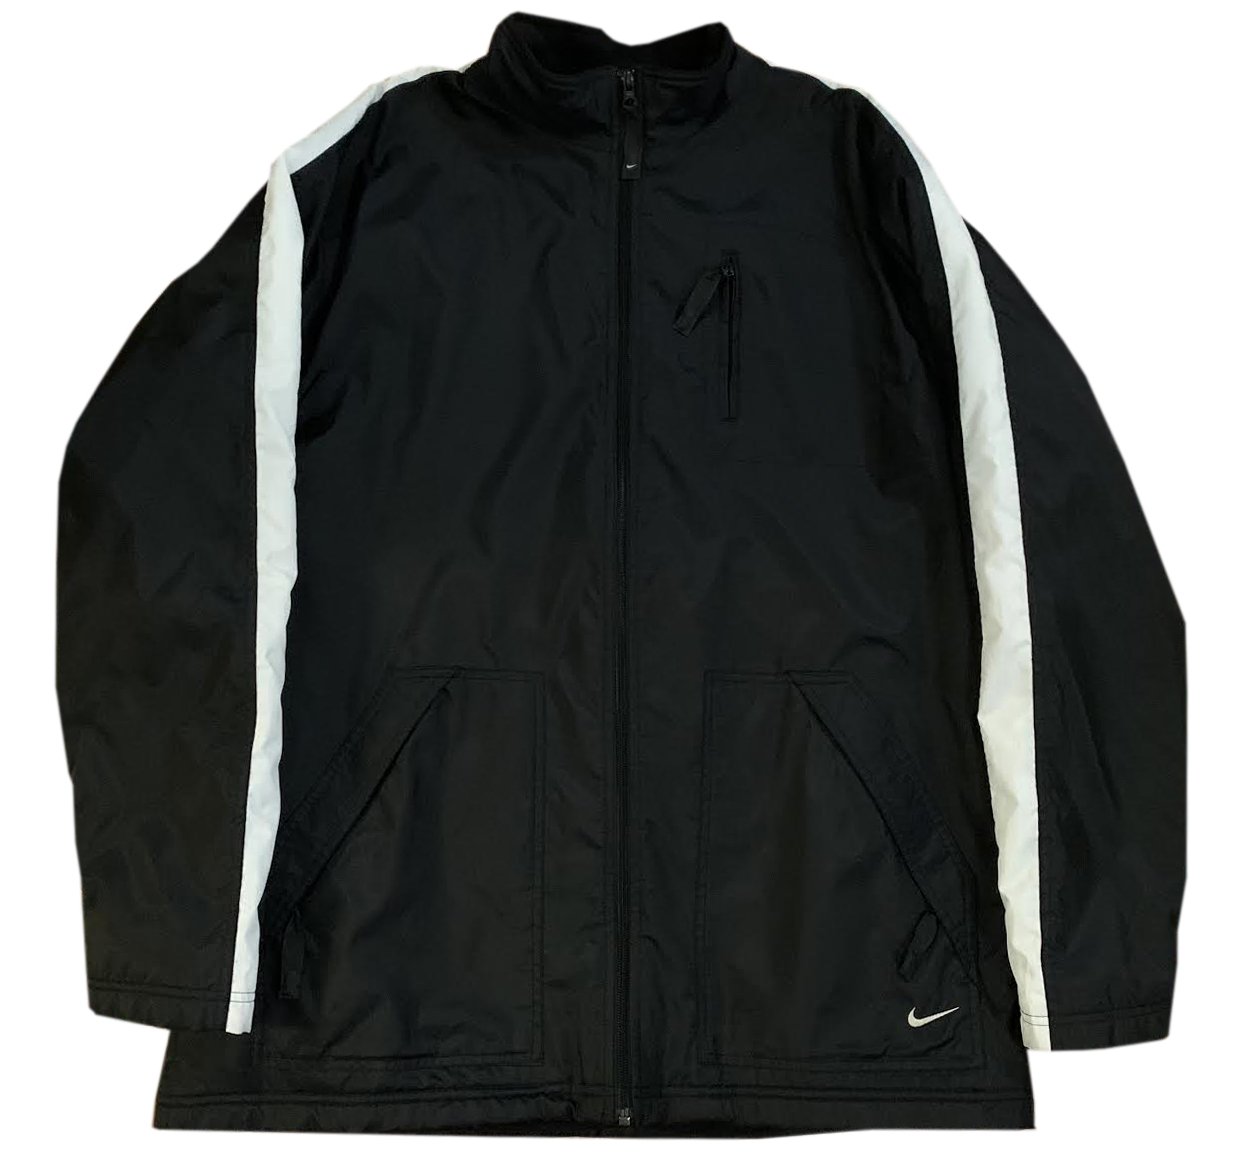 Nike Black/ White Fleece Lined Jacket (Size Roots